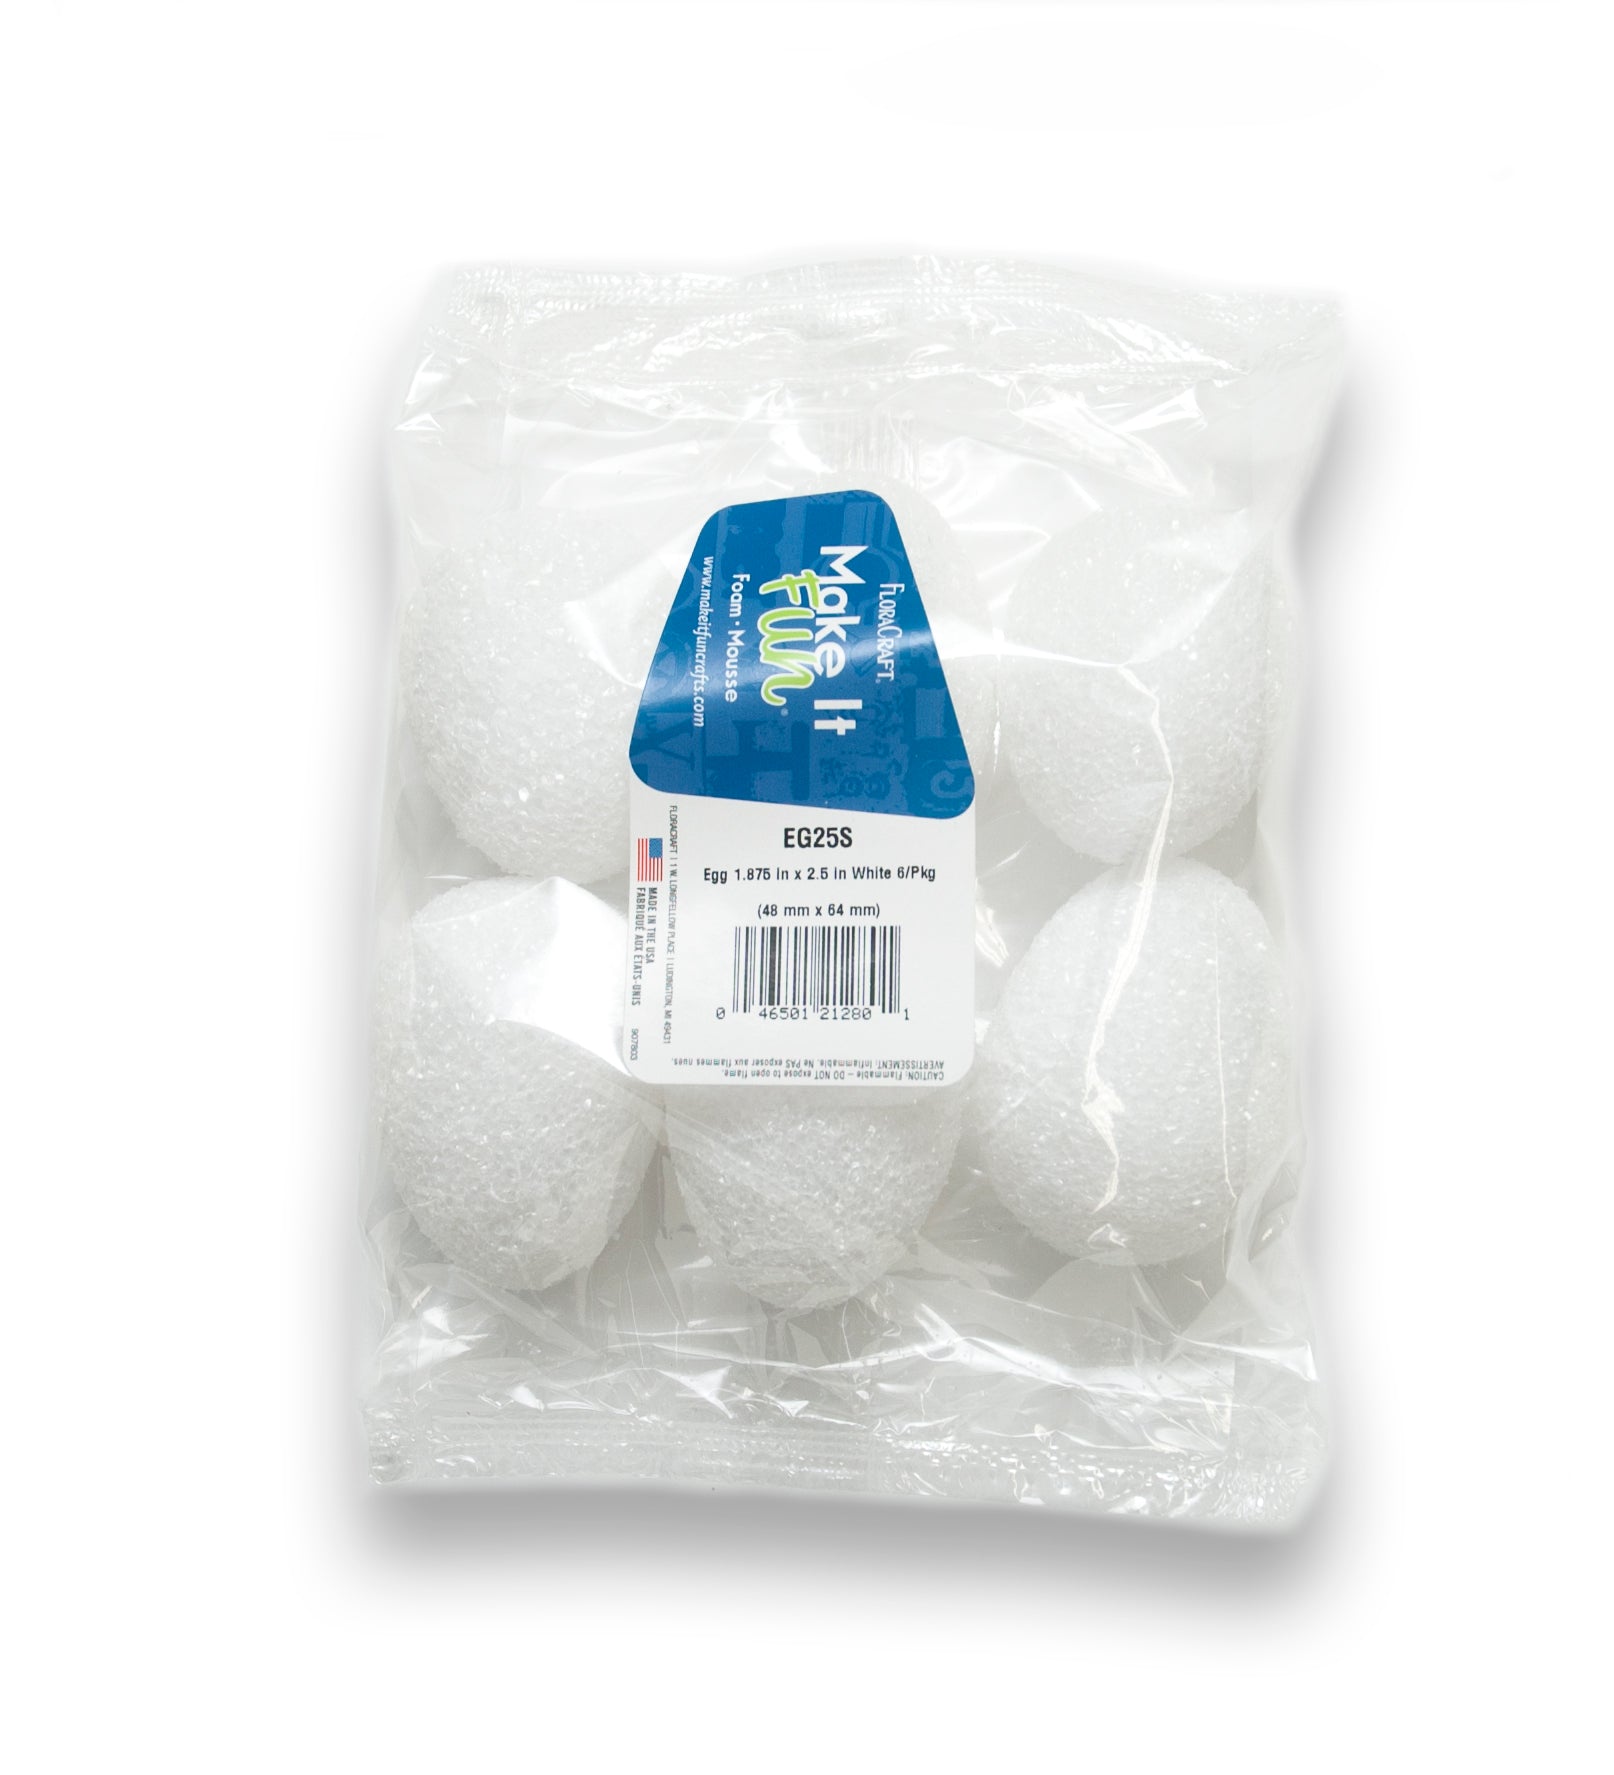 Styrofoam Balls 6-pkg-2.5